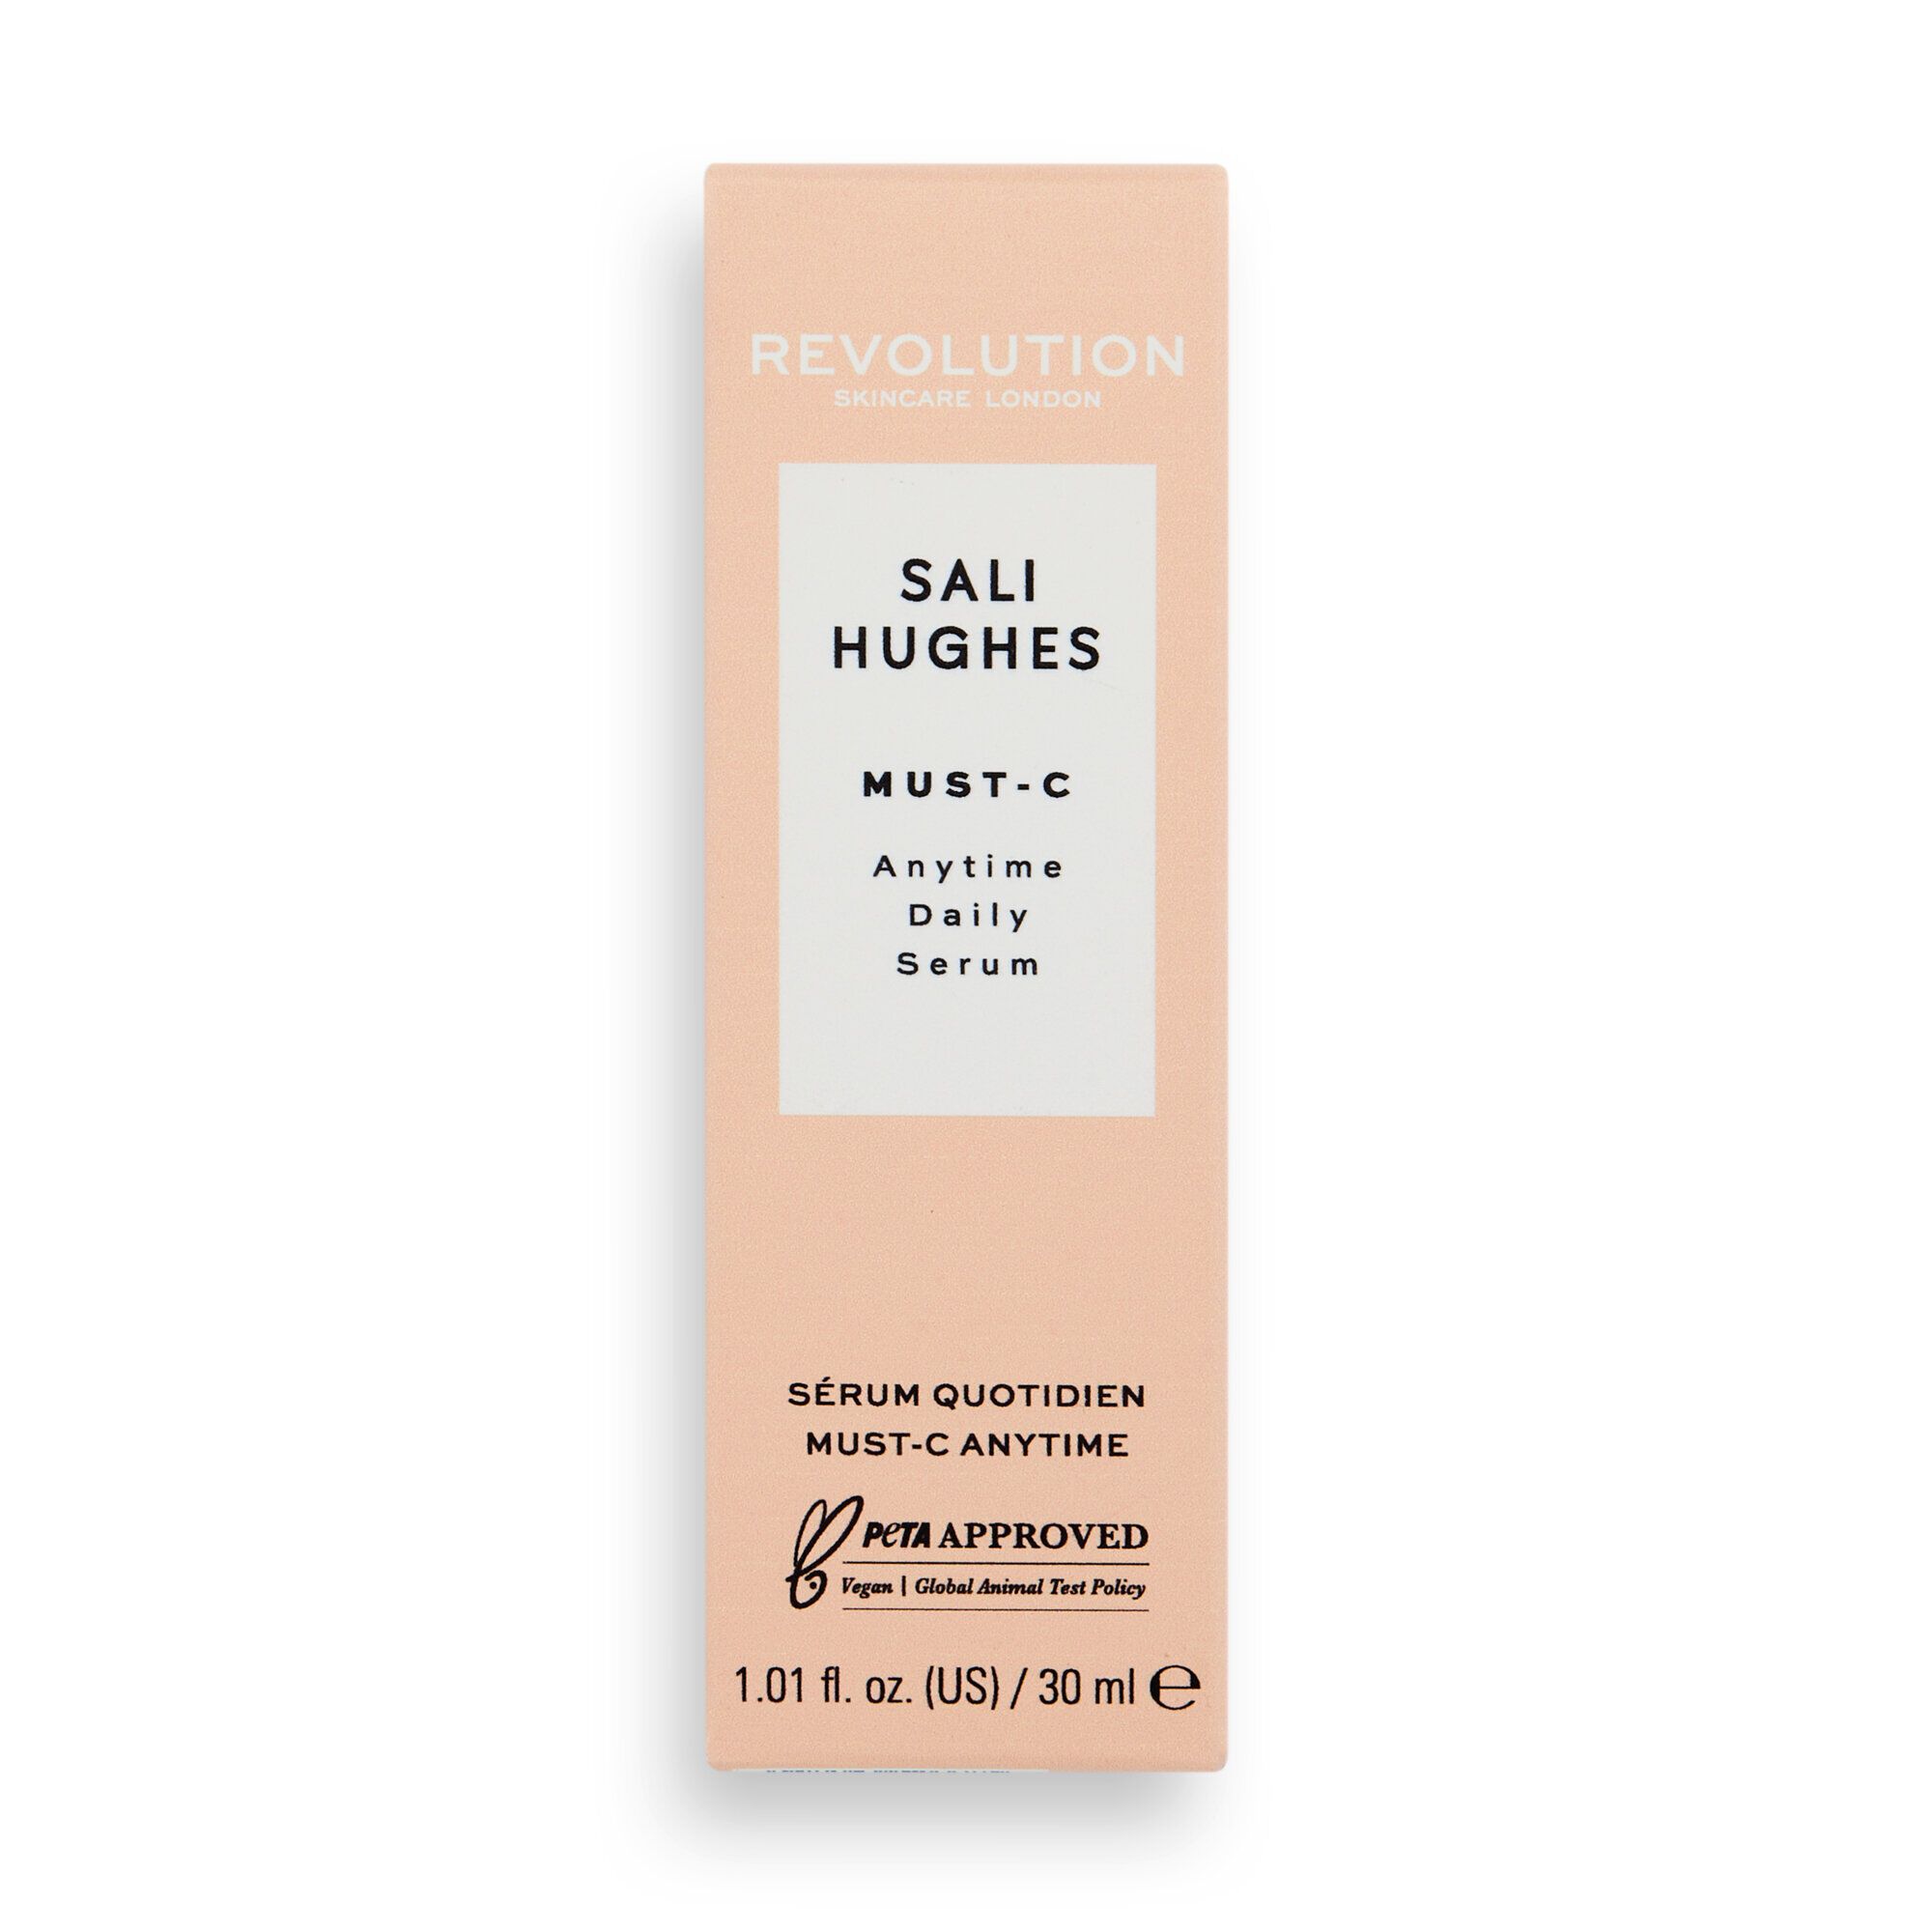 Revolution Skincare x Sali Hughes - Must-C Anytime Daily Serum